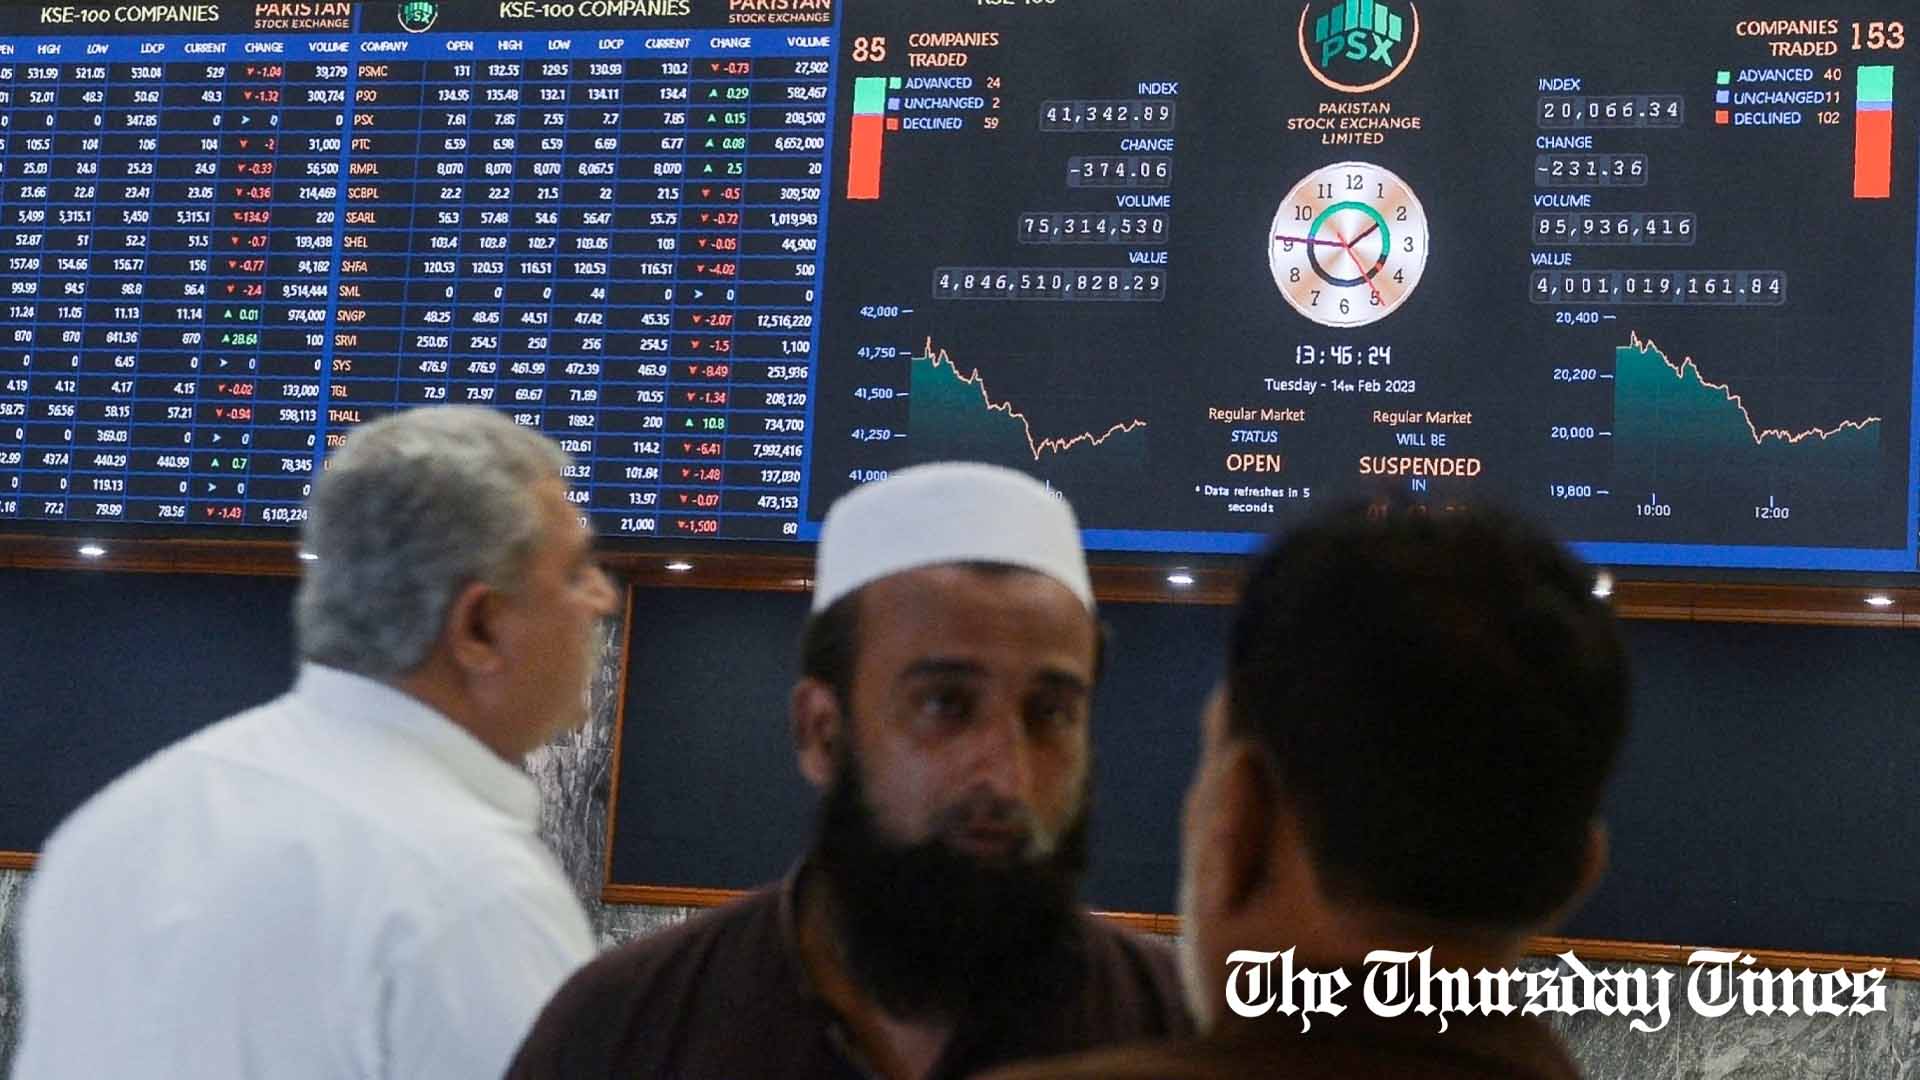 The Pakistan Stock Exchange is shown at Karachi. — FILE/THE THURSDAY TIMES